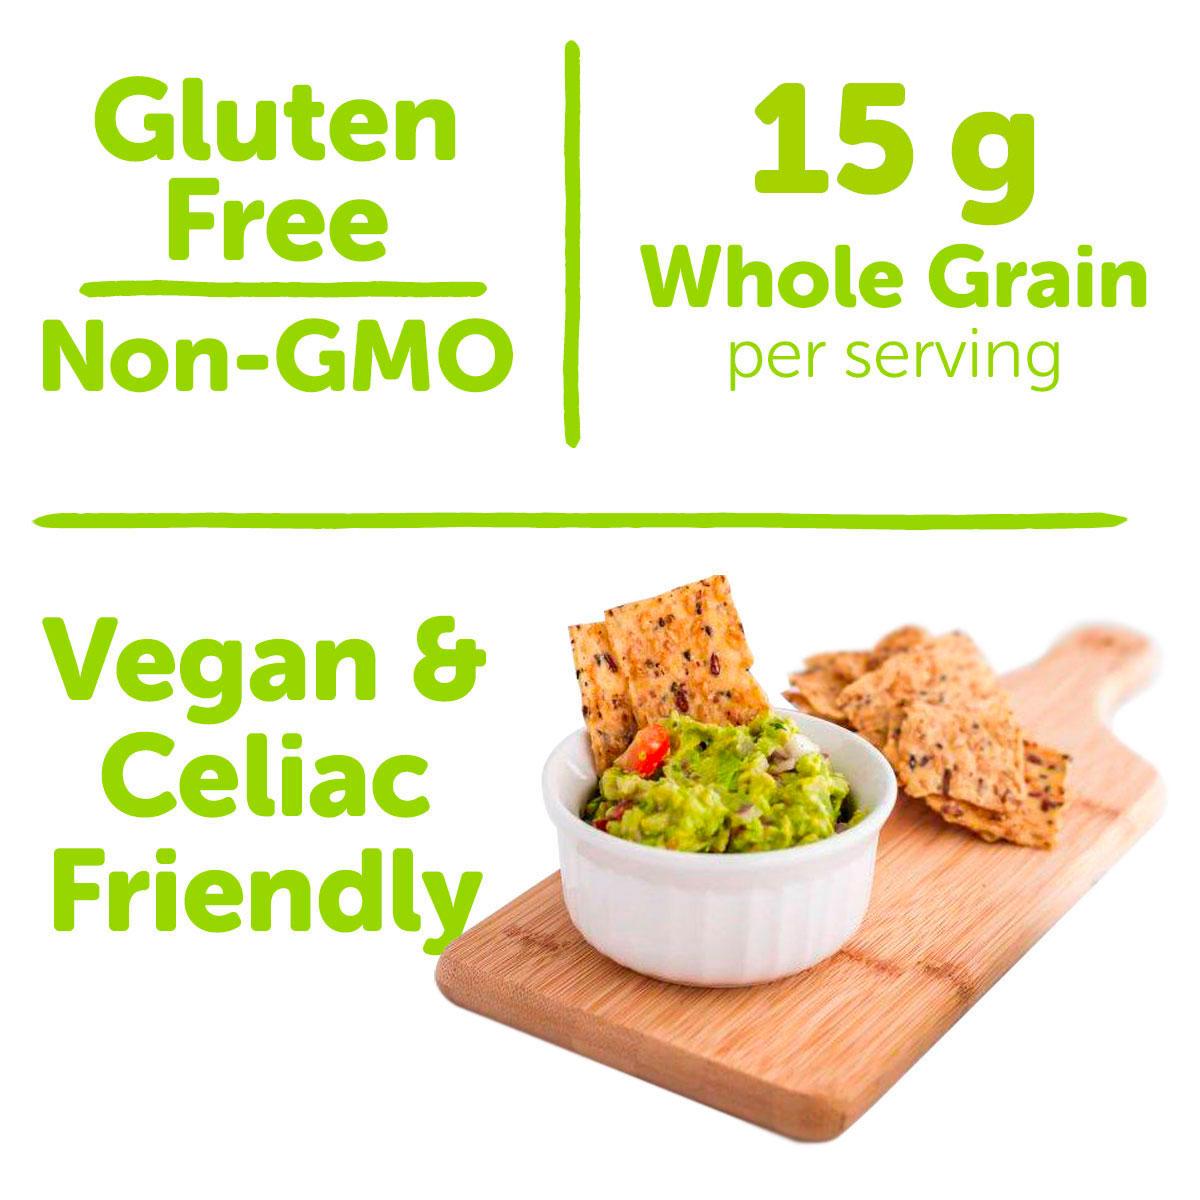 Gluten Free / 15g Whole Grain per serving / Vegan and Celiac Friendly